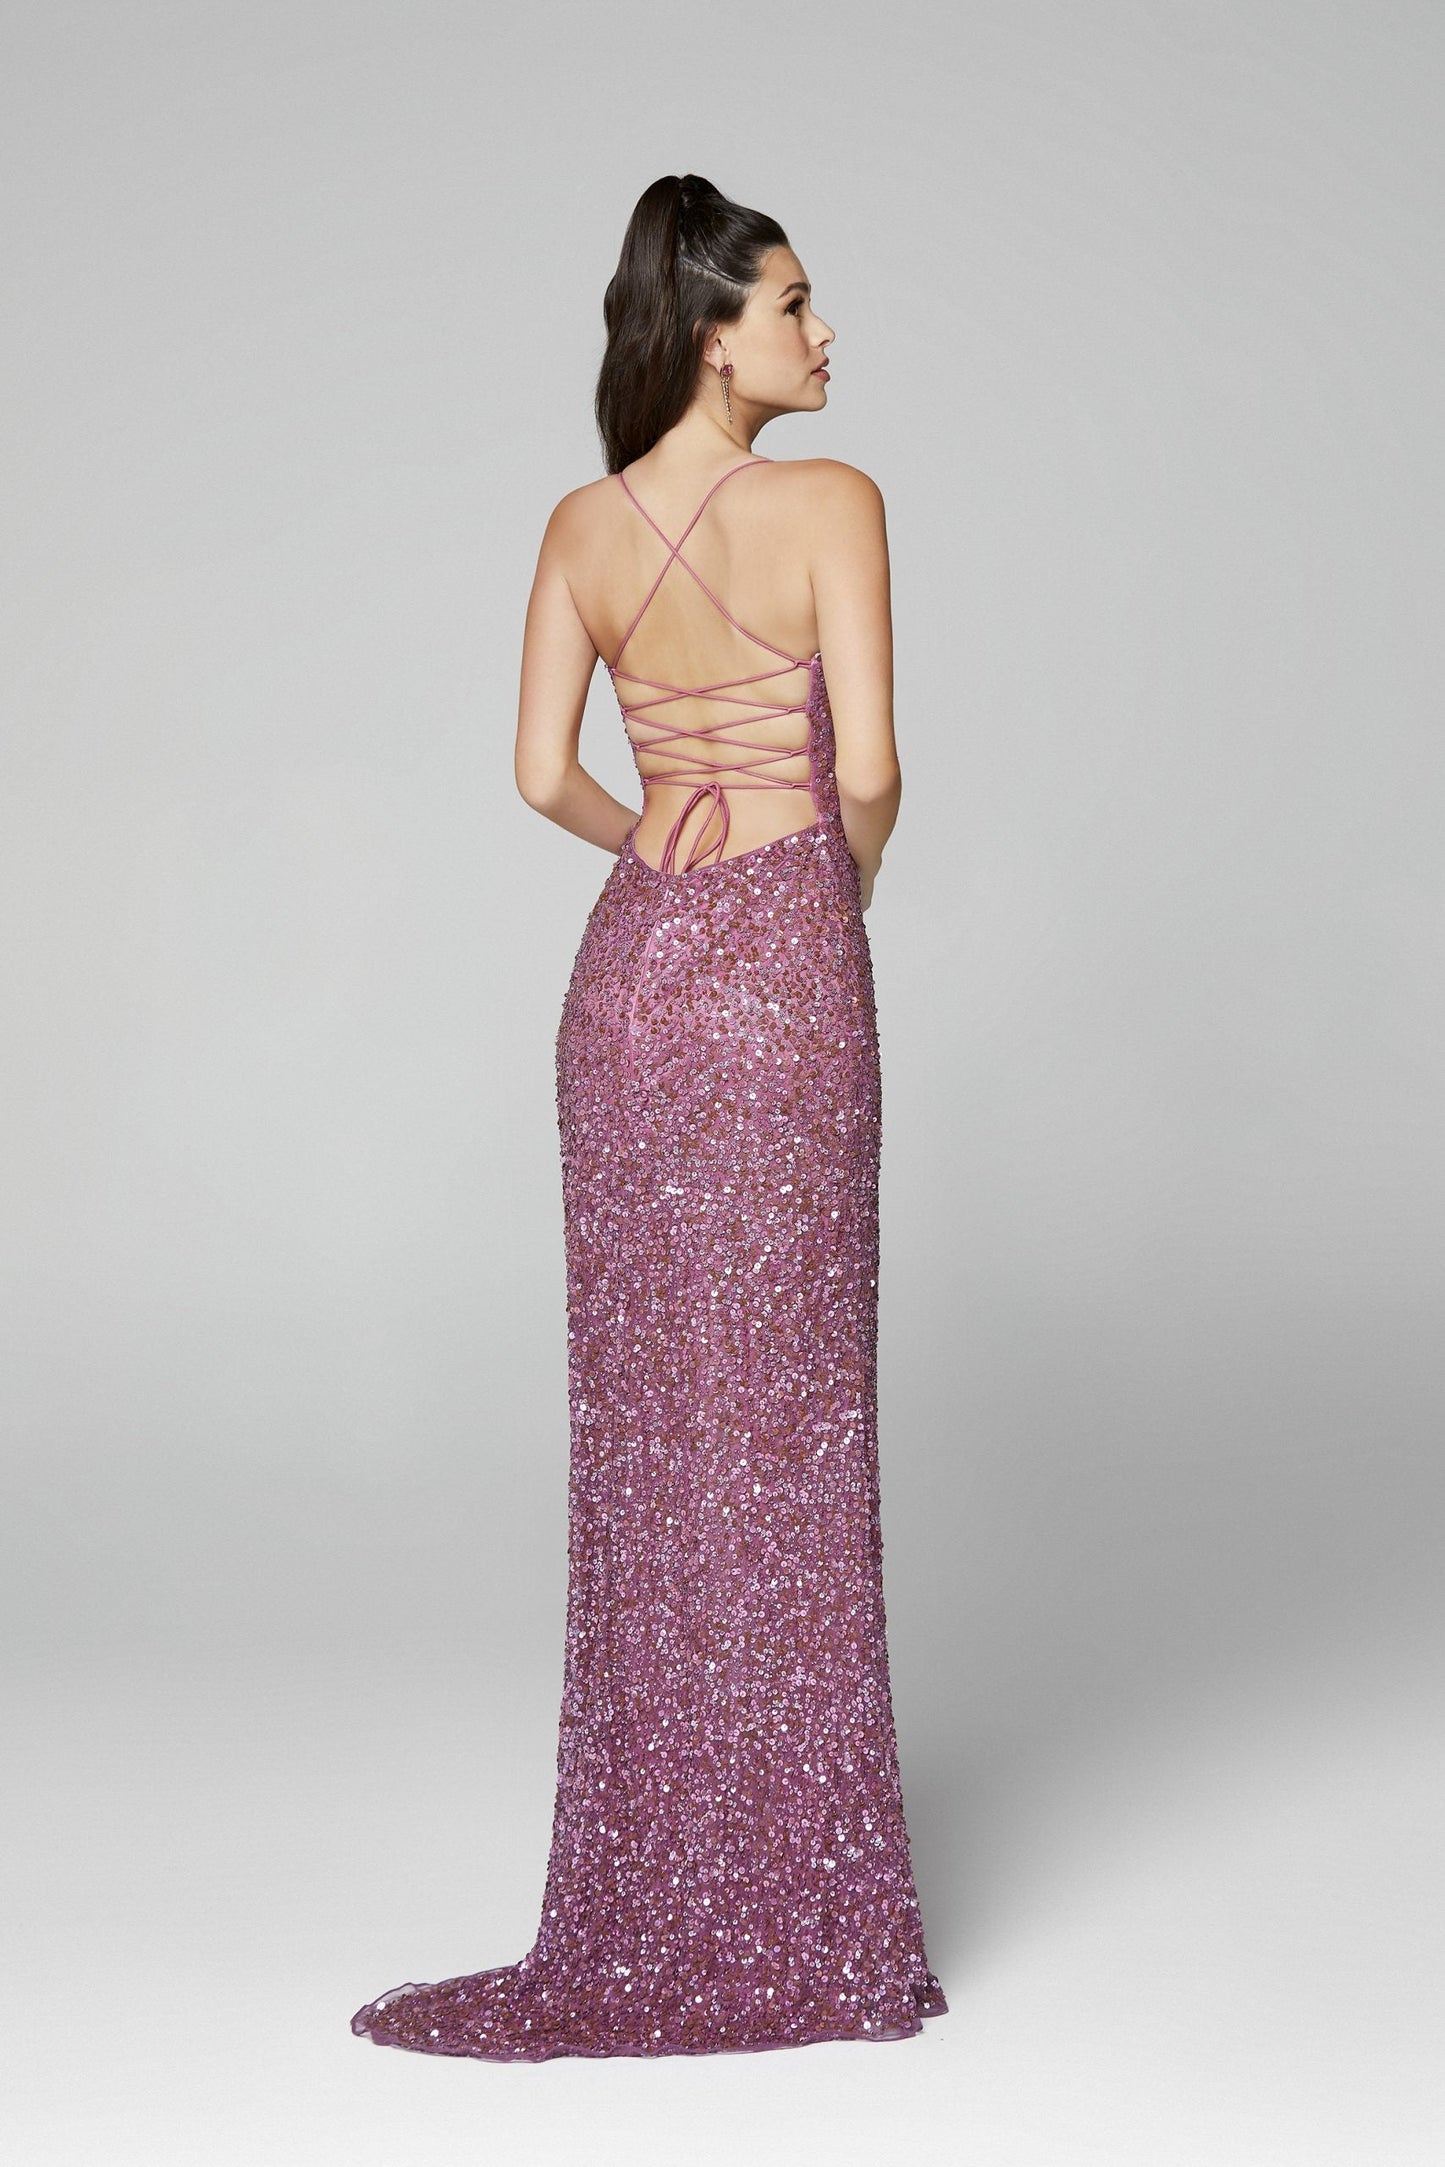 Primavera Couture 3290 Size 8 Orange Prom Dress Sequins Long Fitted Tie Back Scoop Neckline